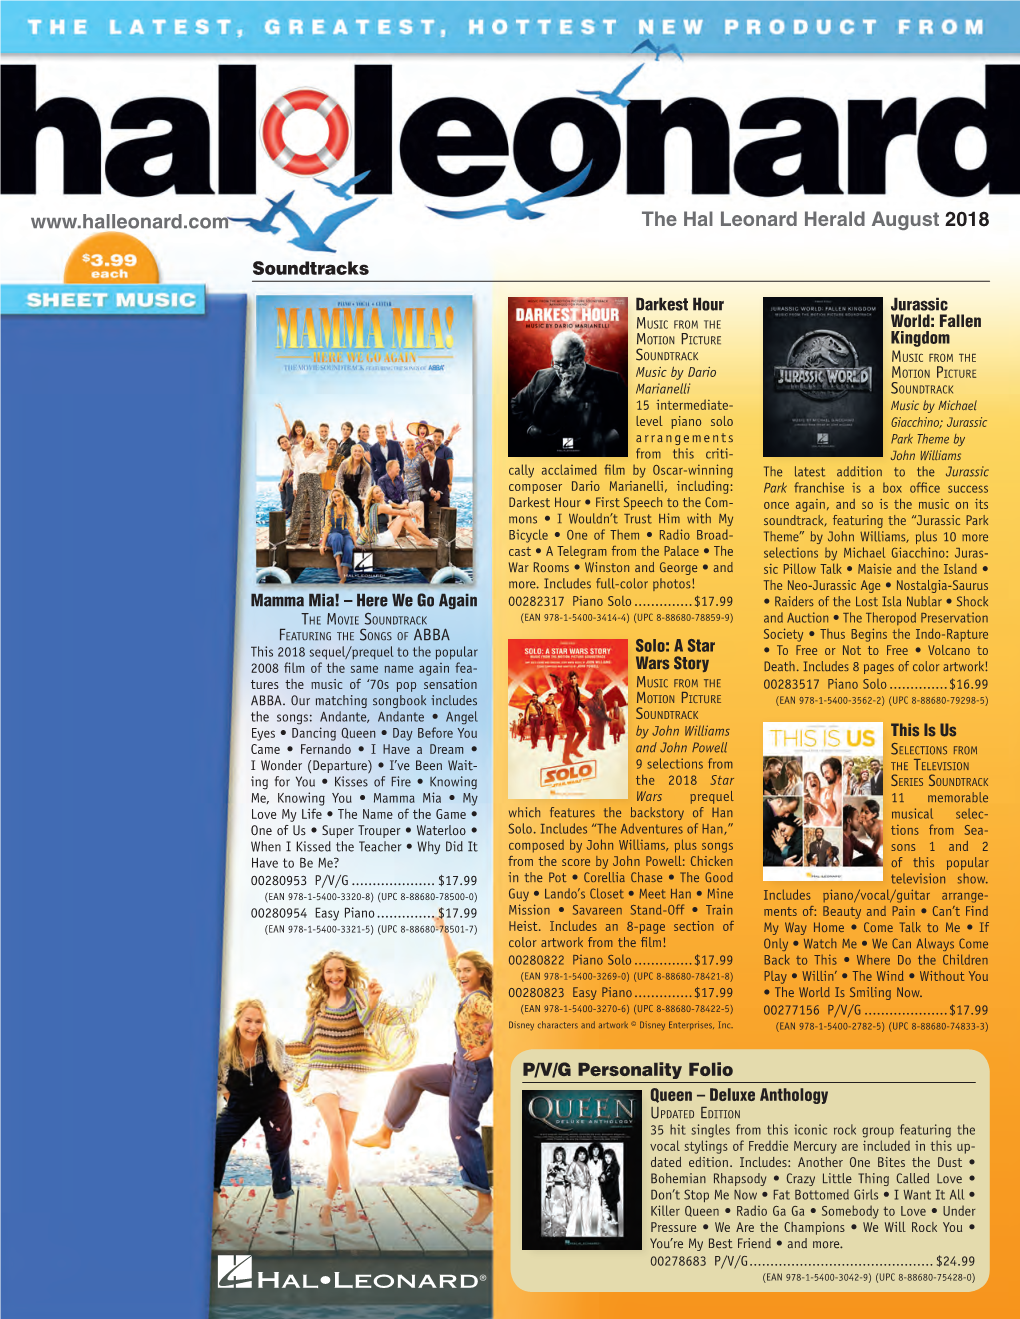 The Hal Leonard Herald August 2018